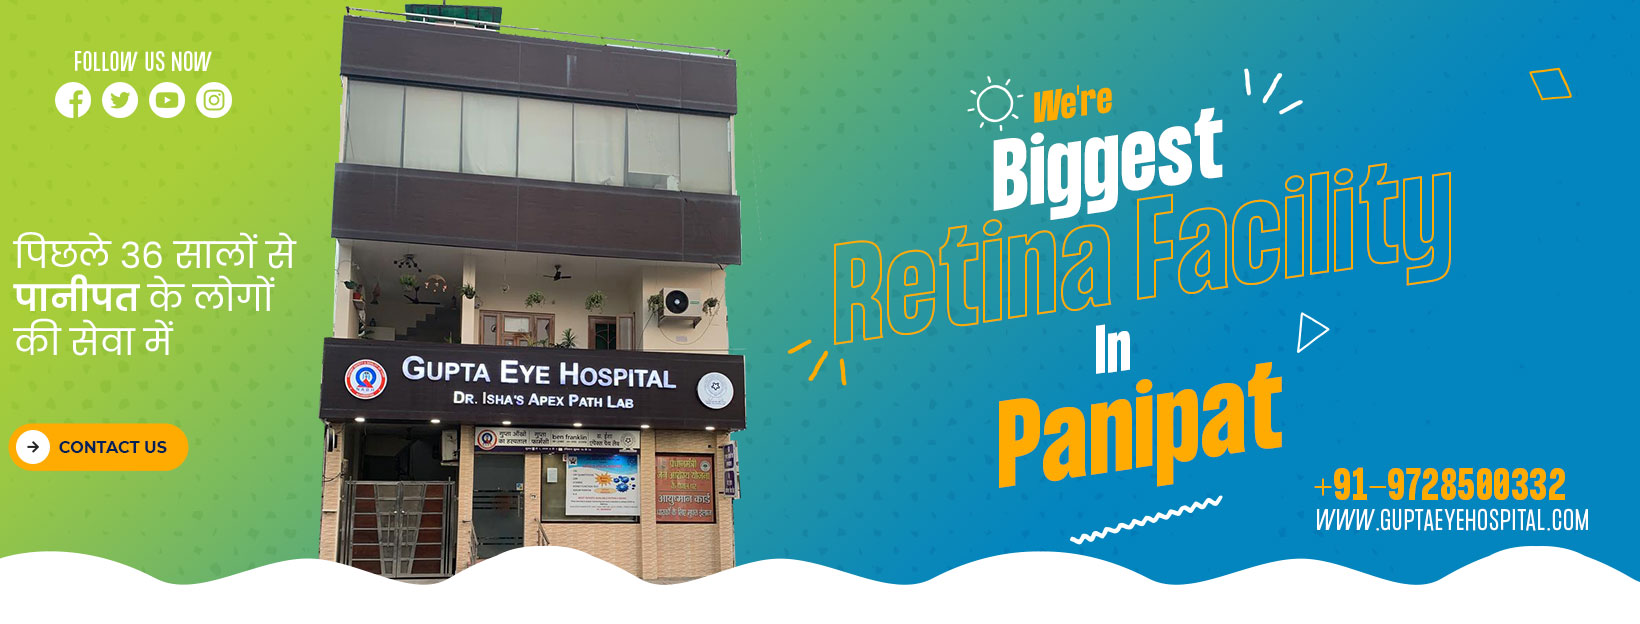 Biggest Retina Facility in Panipat | Gupta Eye Hospital - Panipat